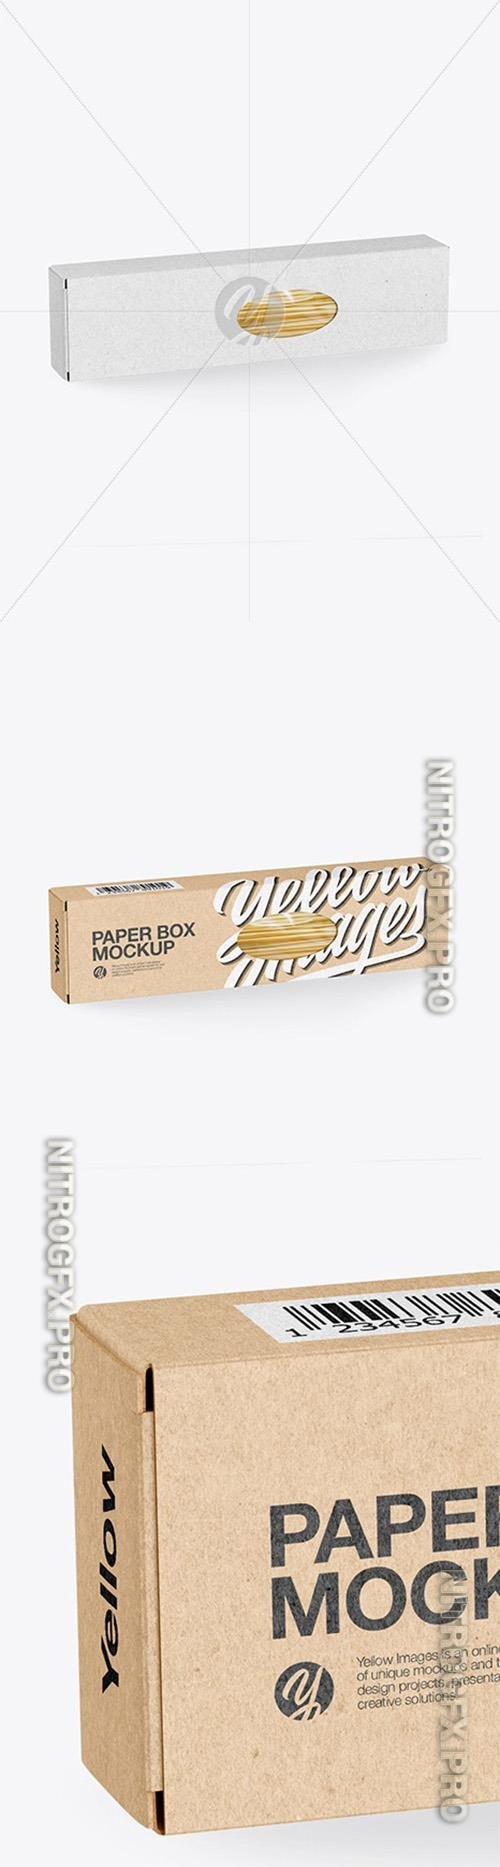 Kraft Paper Box with Spaghetti Mockup 45793